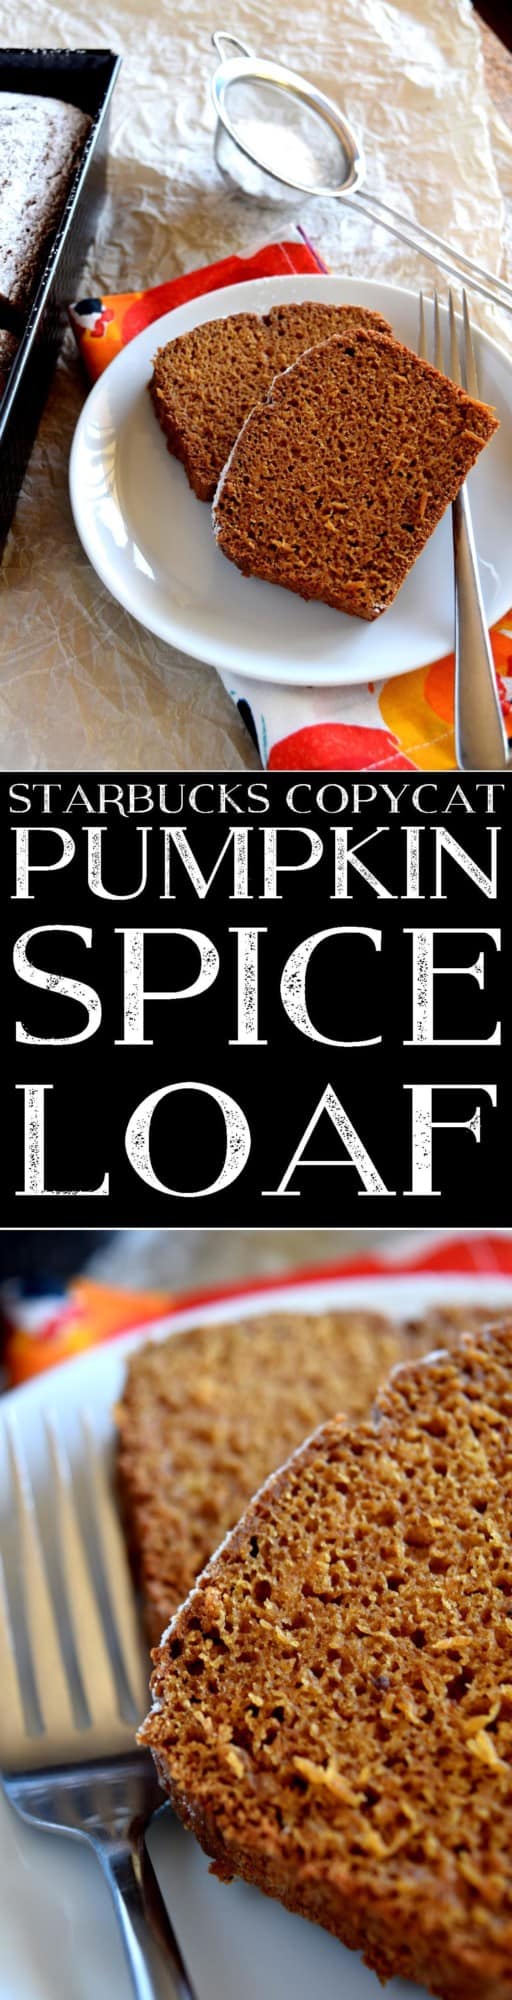 starbucks-copycat-pumpkin-spice-loaf